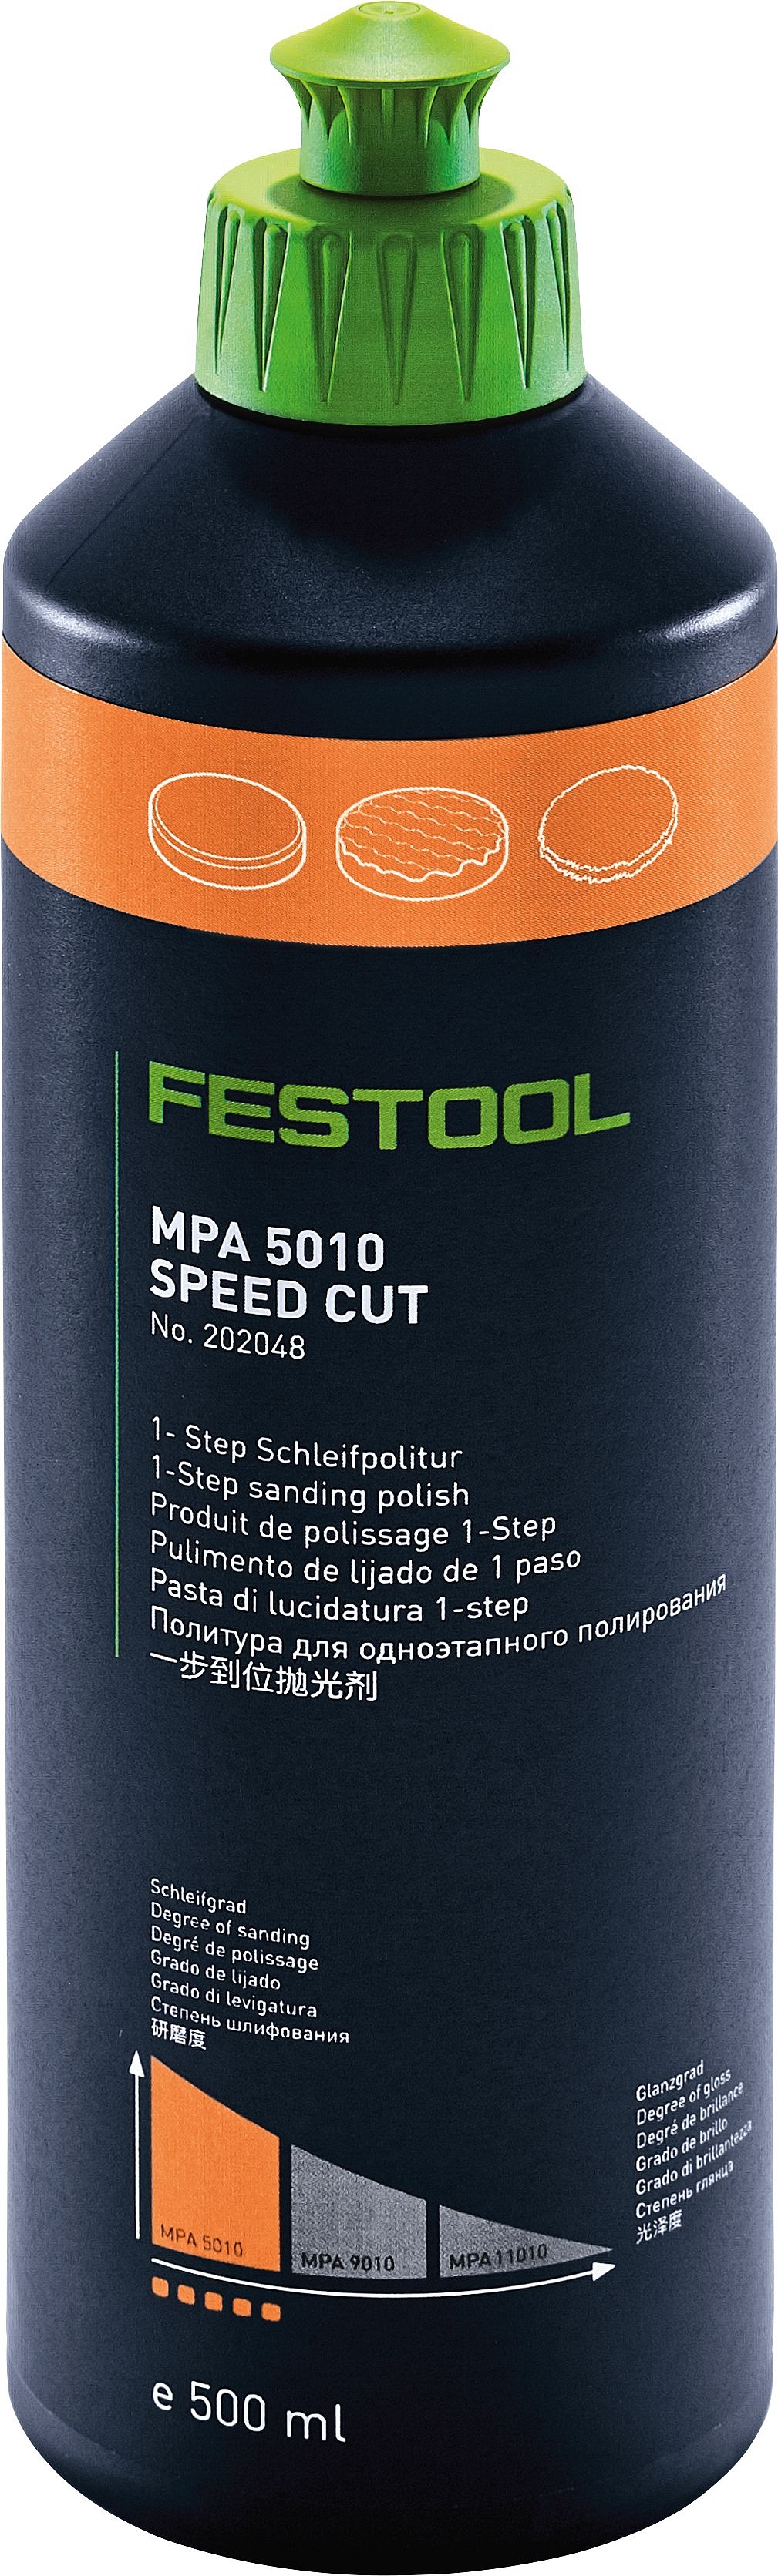 Festool Massi MPA 5010 Fine 202048